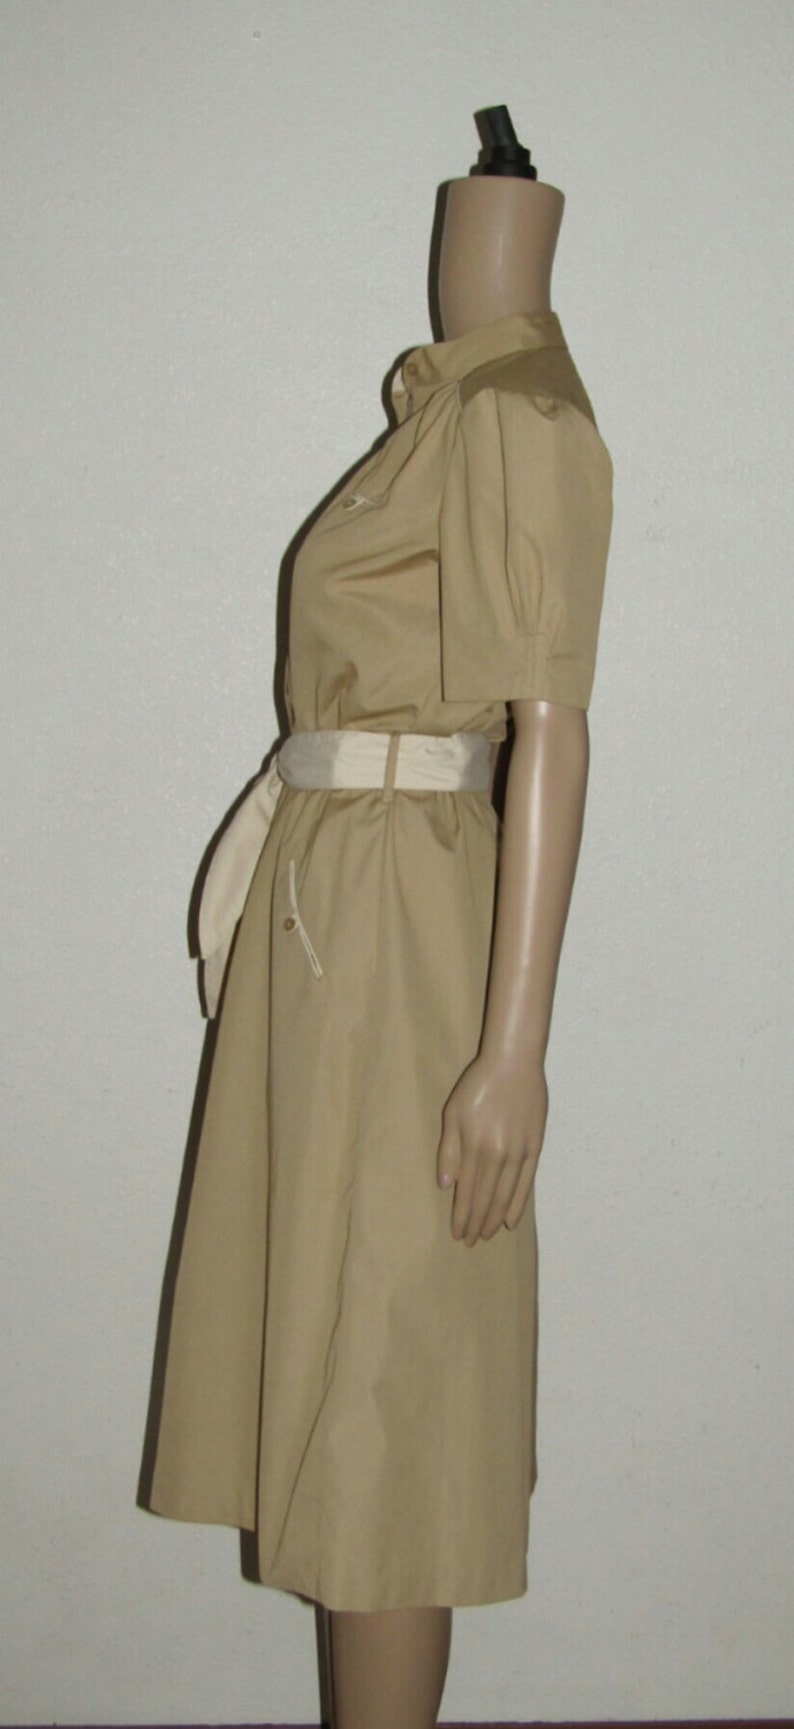 80s Khaki Cotton Dress Beige Uniform Style Size Small to Medium Retro Preppy A-Line Skirt Zipper Front Vintage Sporty Casual Day Dresses image 3